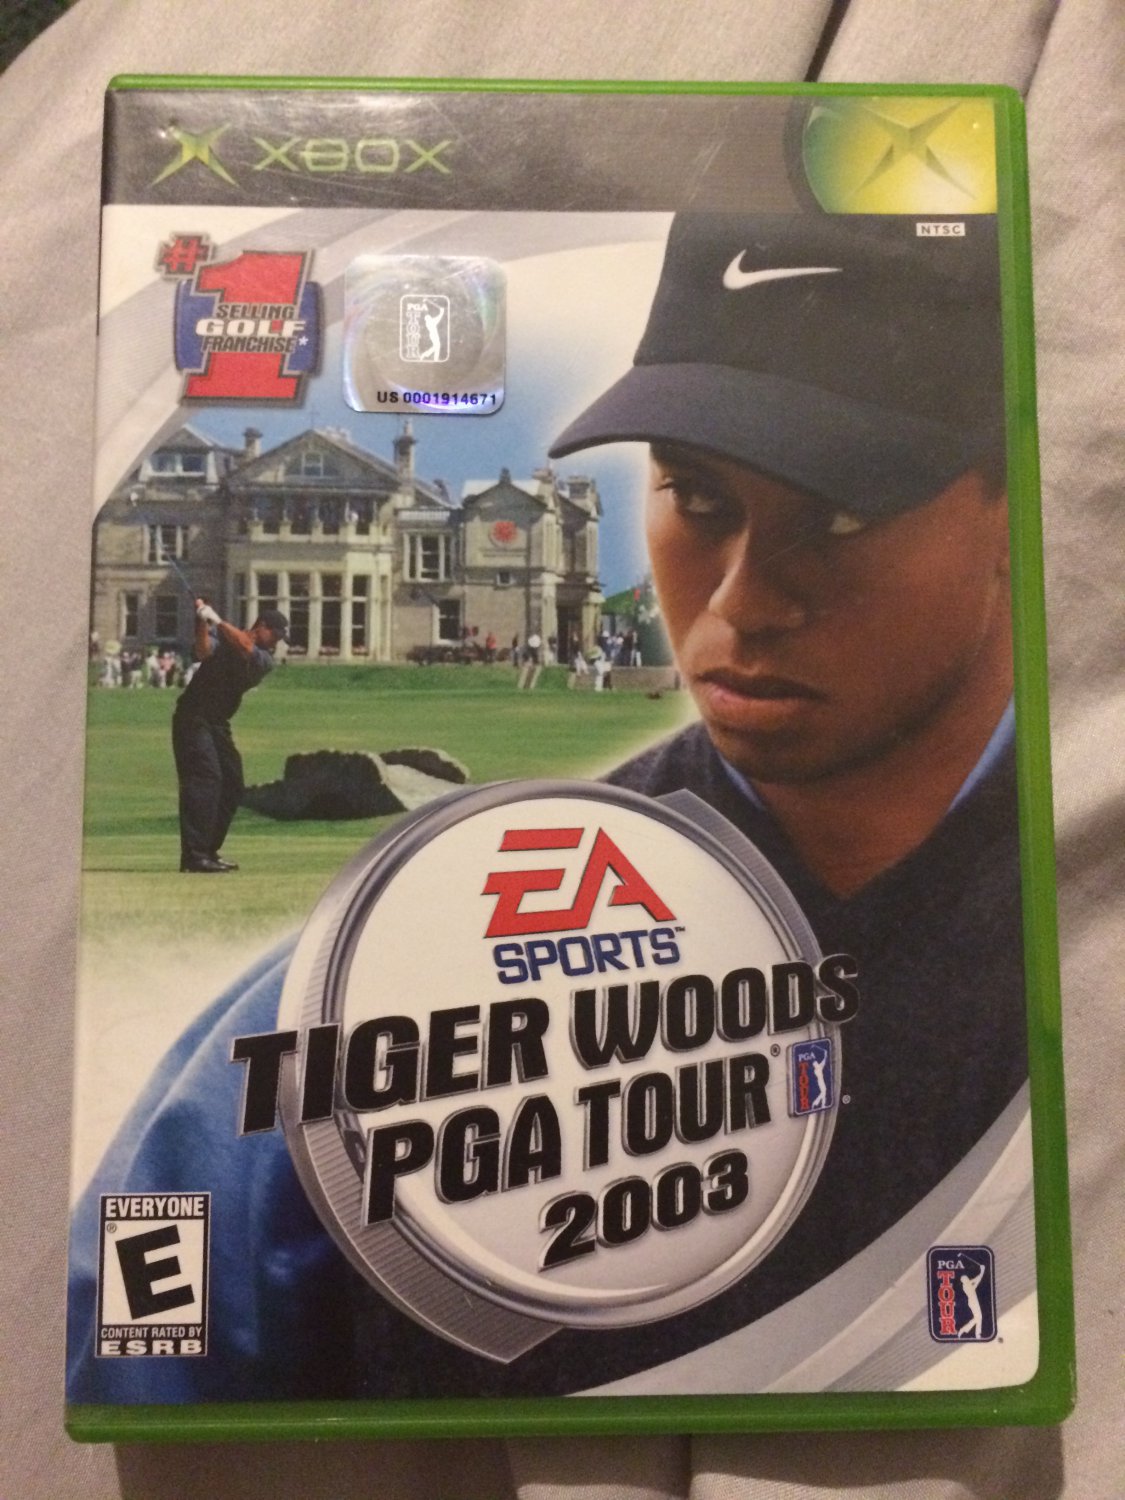 Xbox Tiger Woods PGA tour 2003